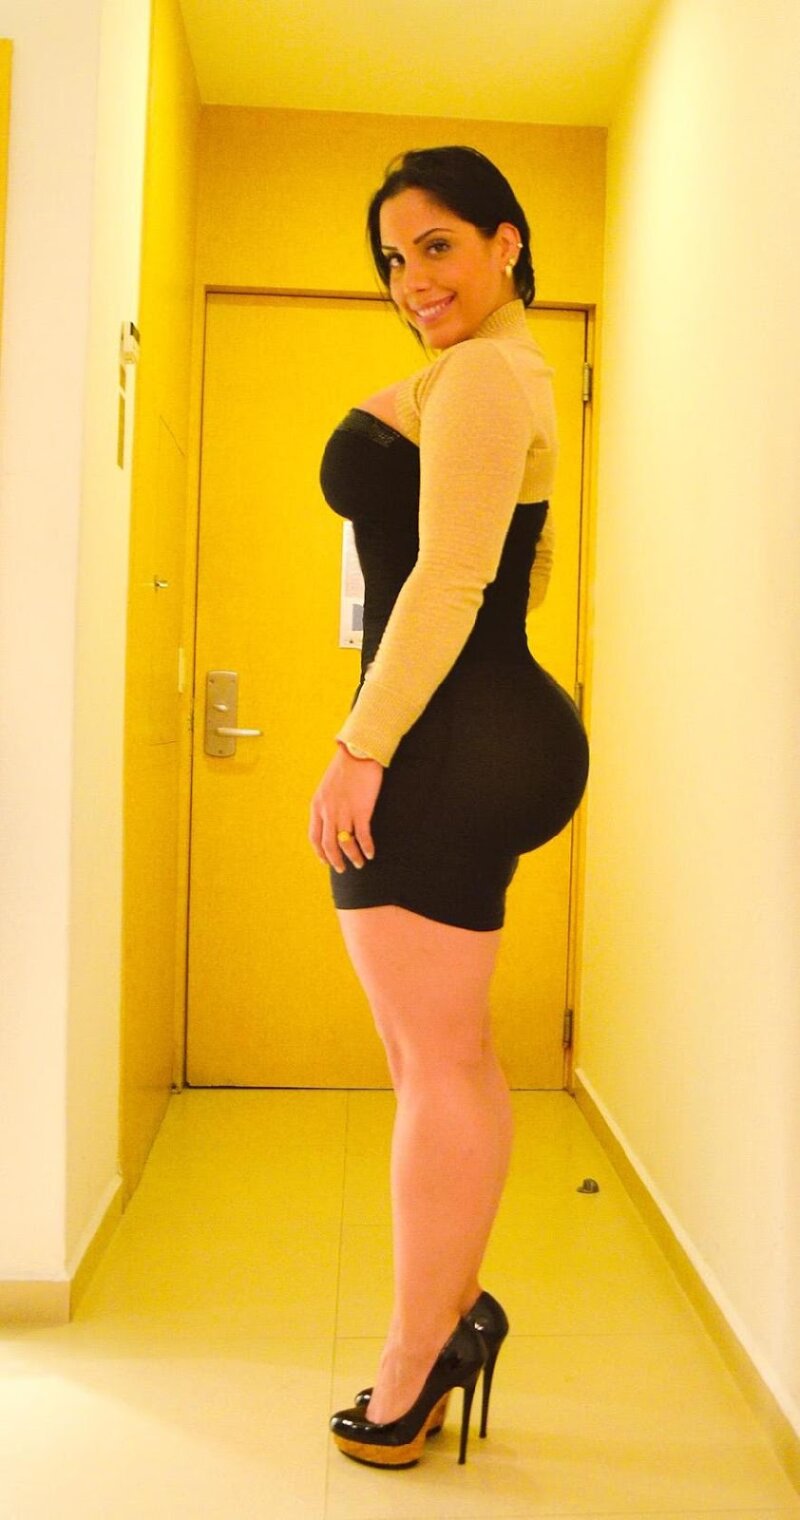 Big ass in black dress picture